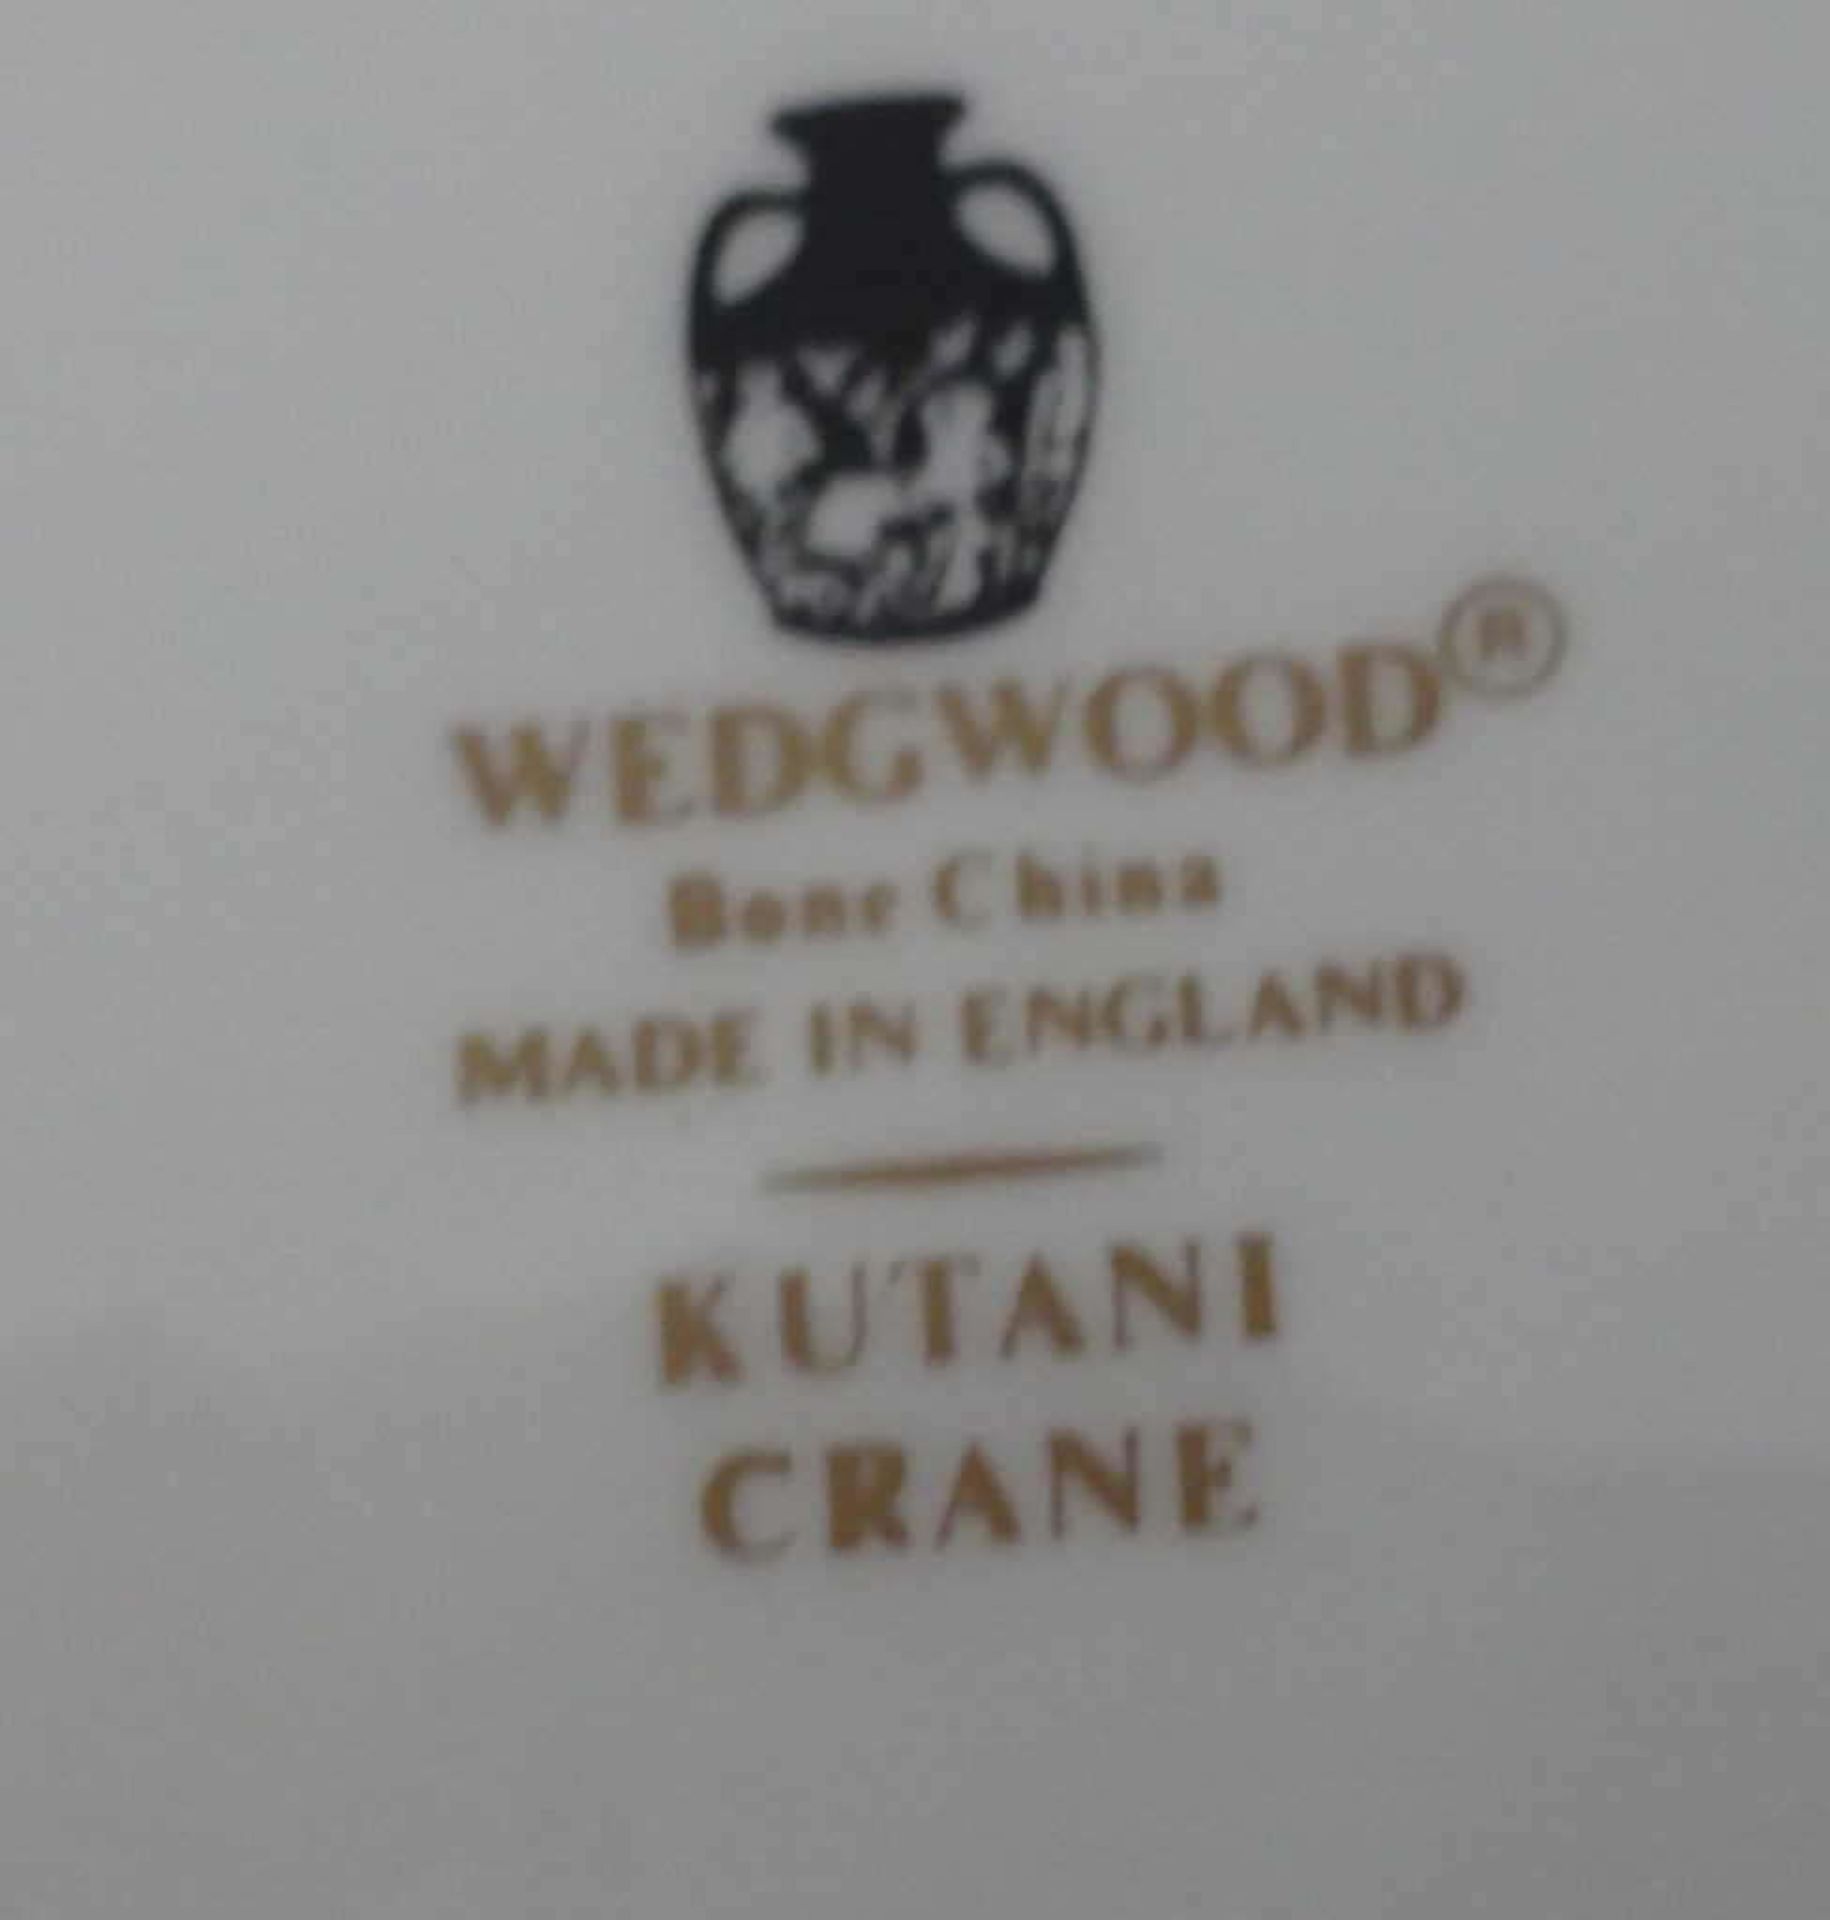 WEDGWOOD Bone China, Made in England, Serie Kutani Crane. Speiseservice, bestehend aus 12 - Bild 6 aus 6